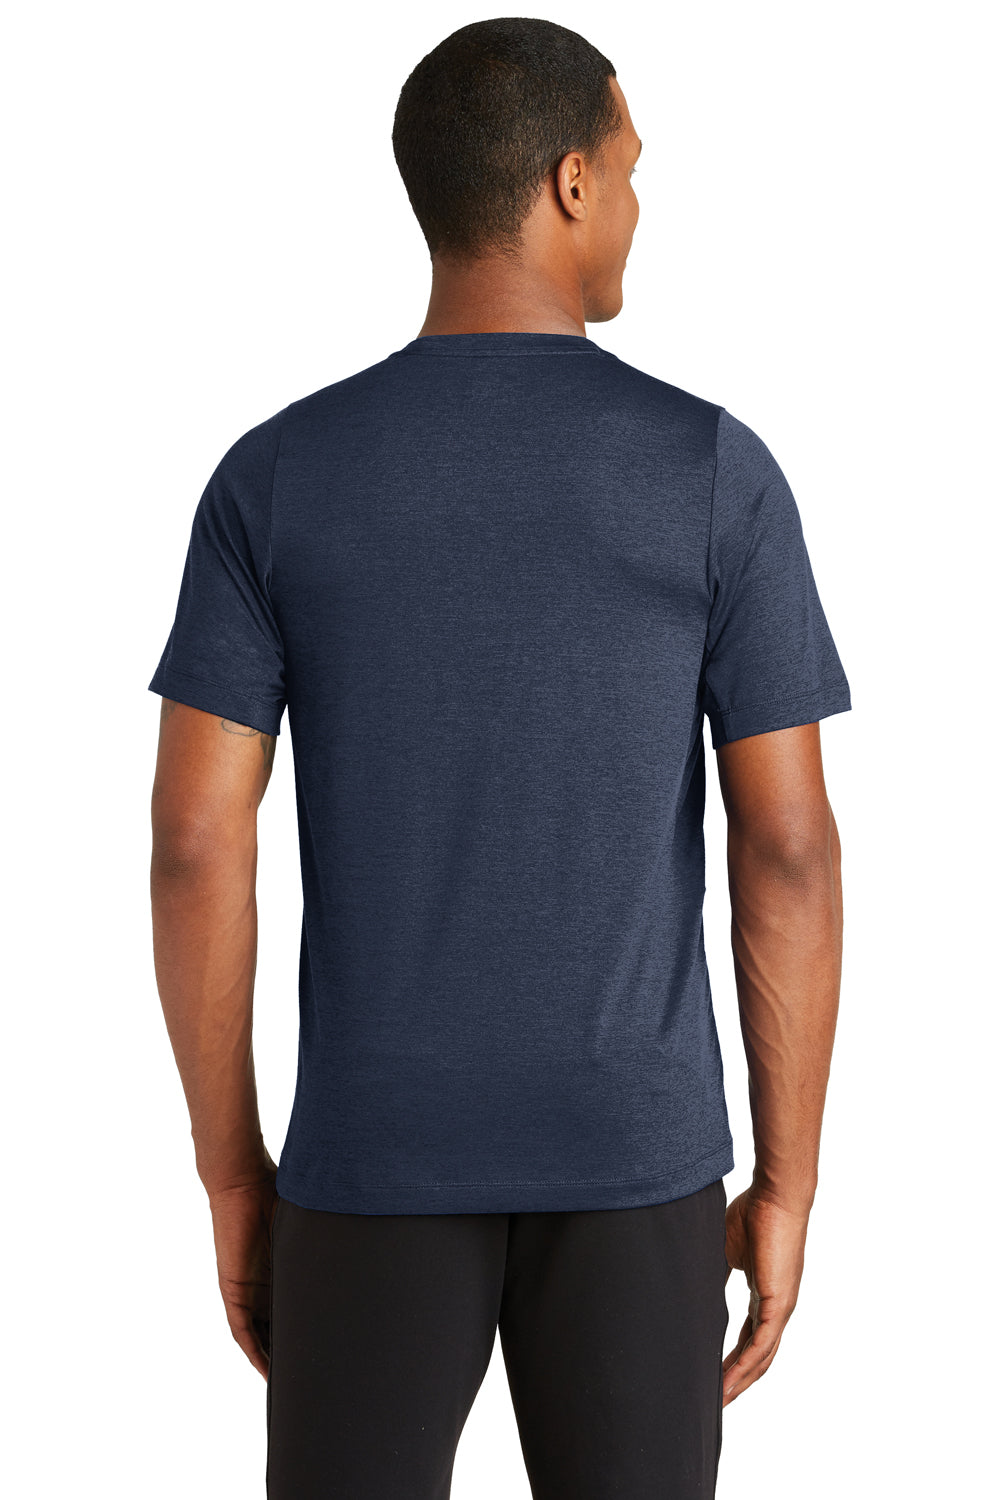 New Era NEA200 Mens Series Performance Jersey Moisture Wicking Short Sleeve Crewneck T-Shirt Navy Blue Back